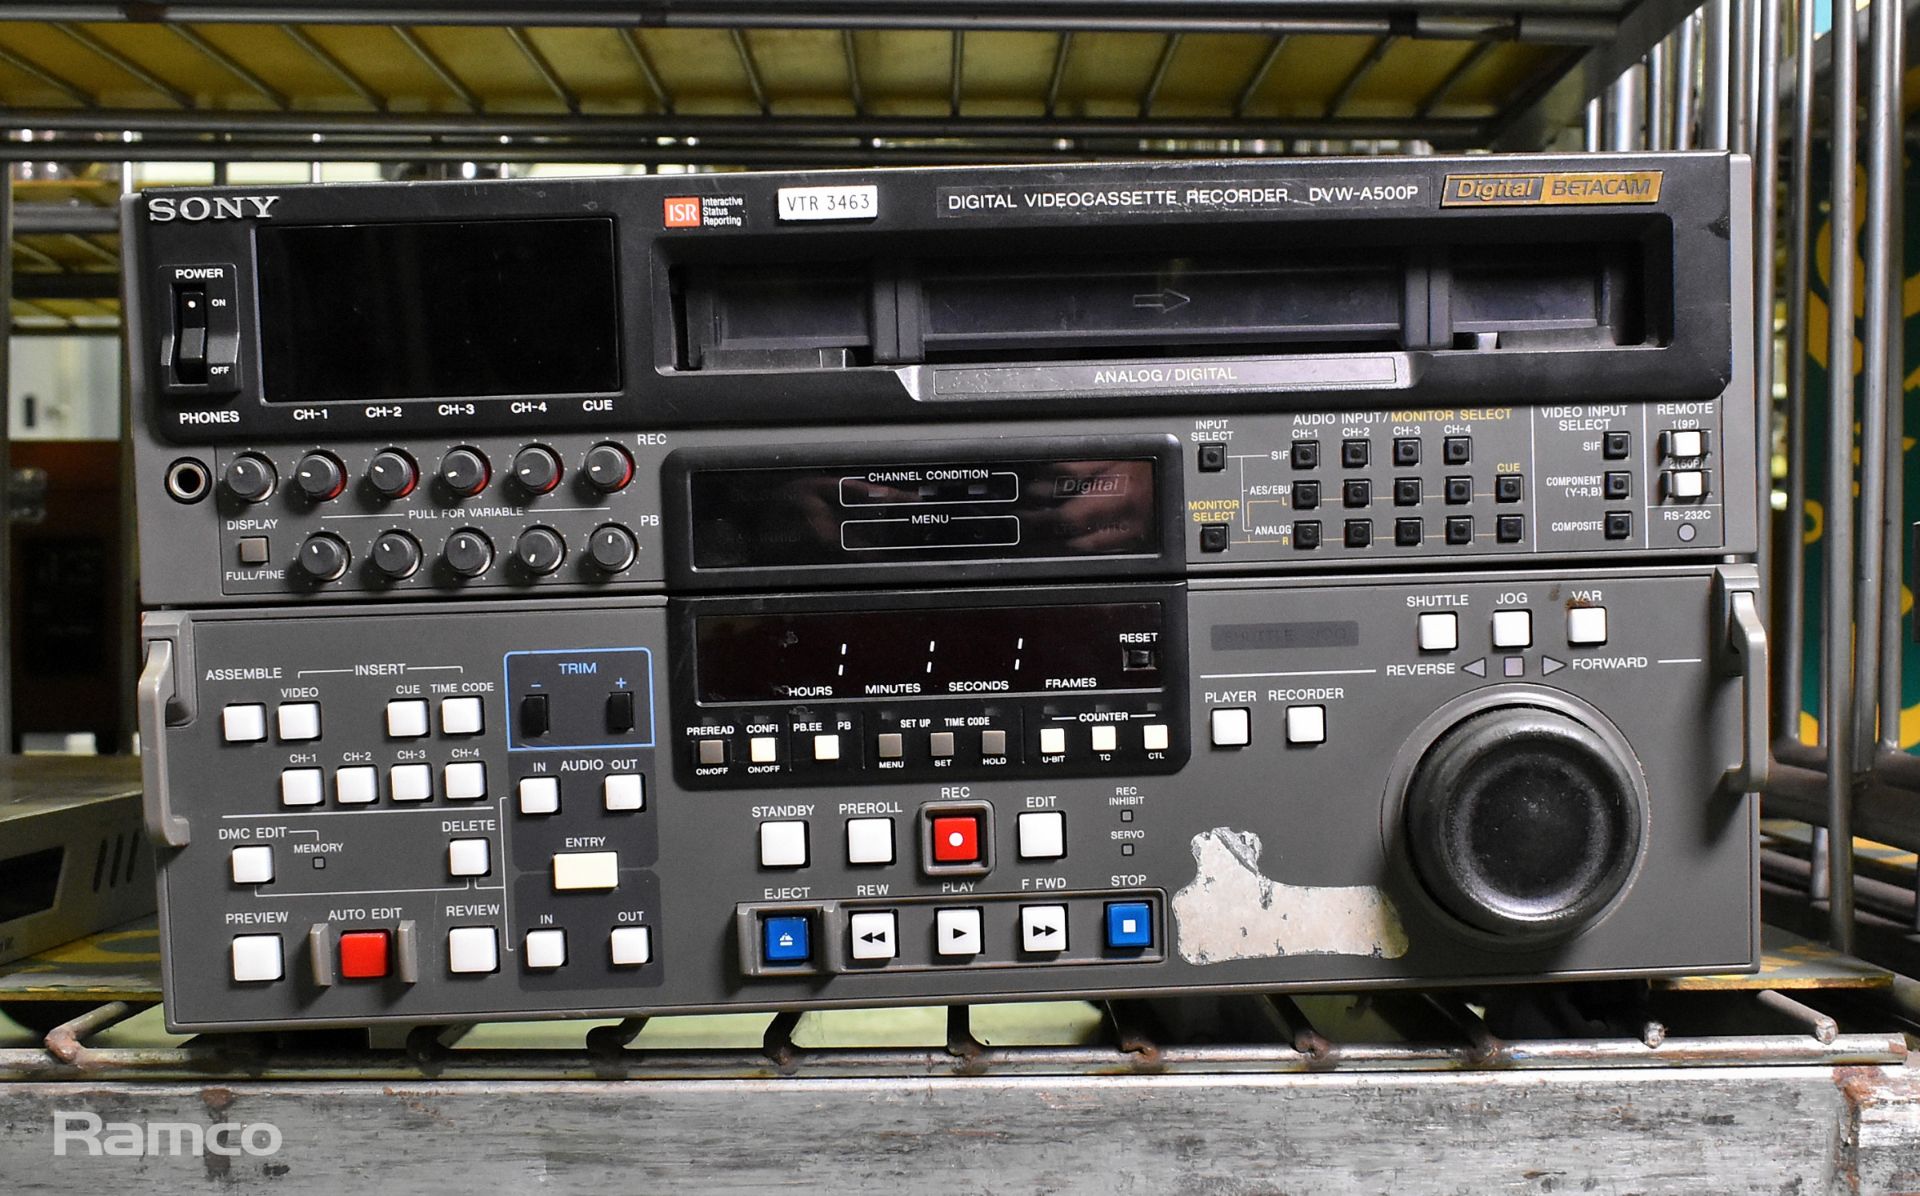 Sony DVW-A500P BetaCam digital video cassette recorder - Image 2 of 2